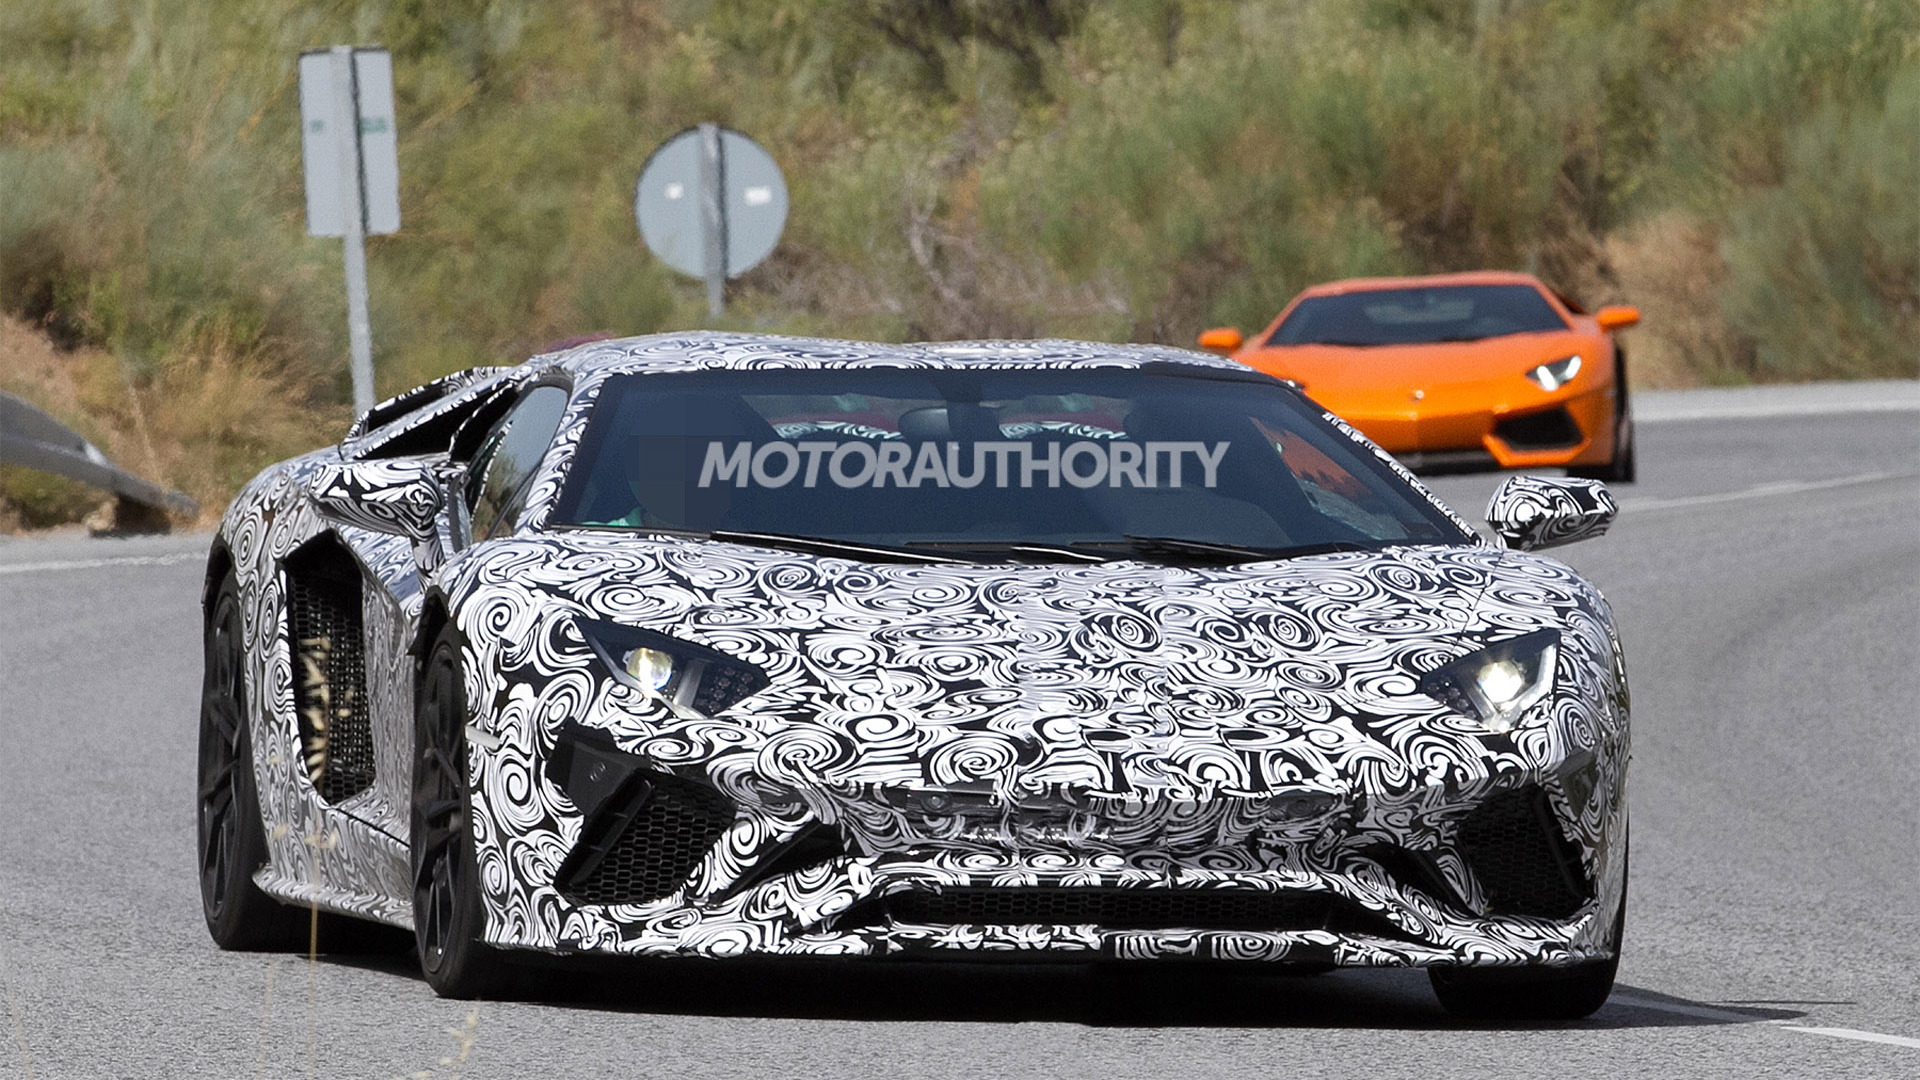 2018 Lamborghini Aventador facelift spy shots - Image via S. Baldauf/SB-Medien